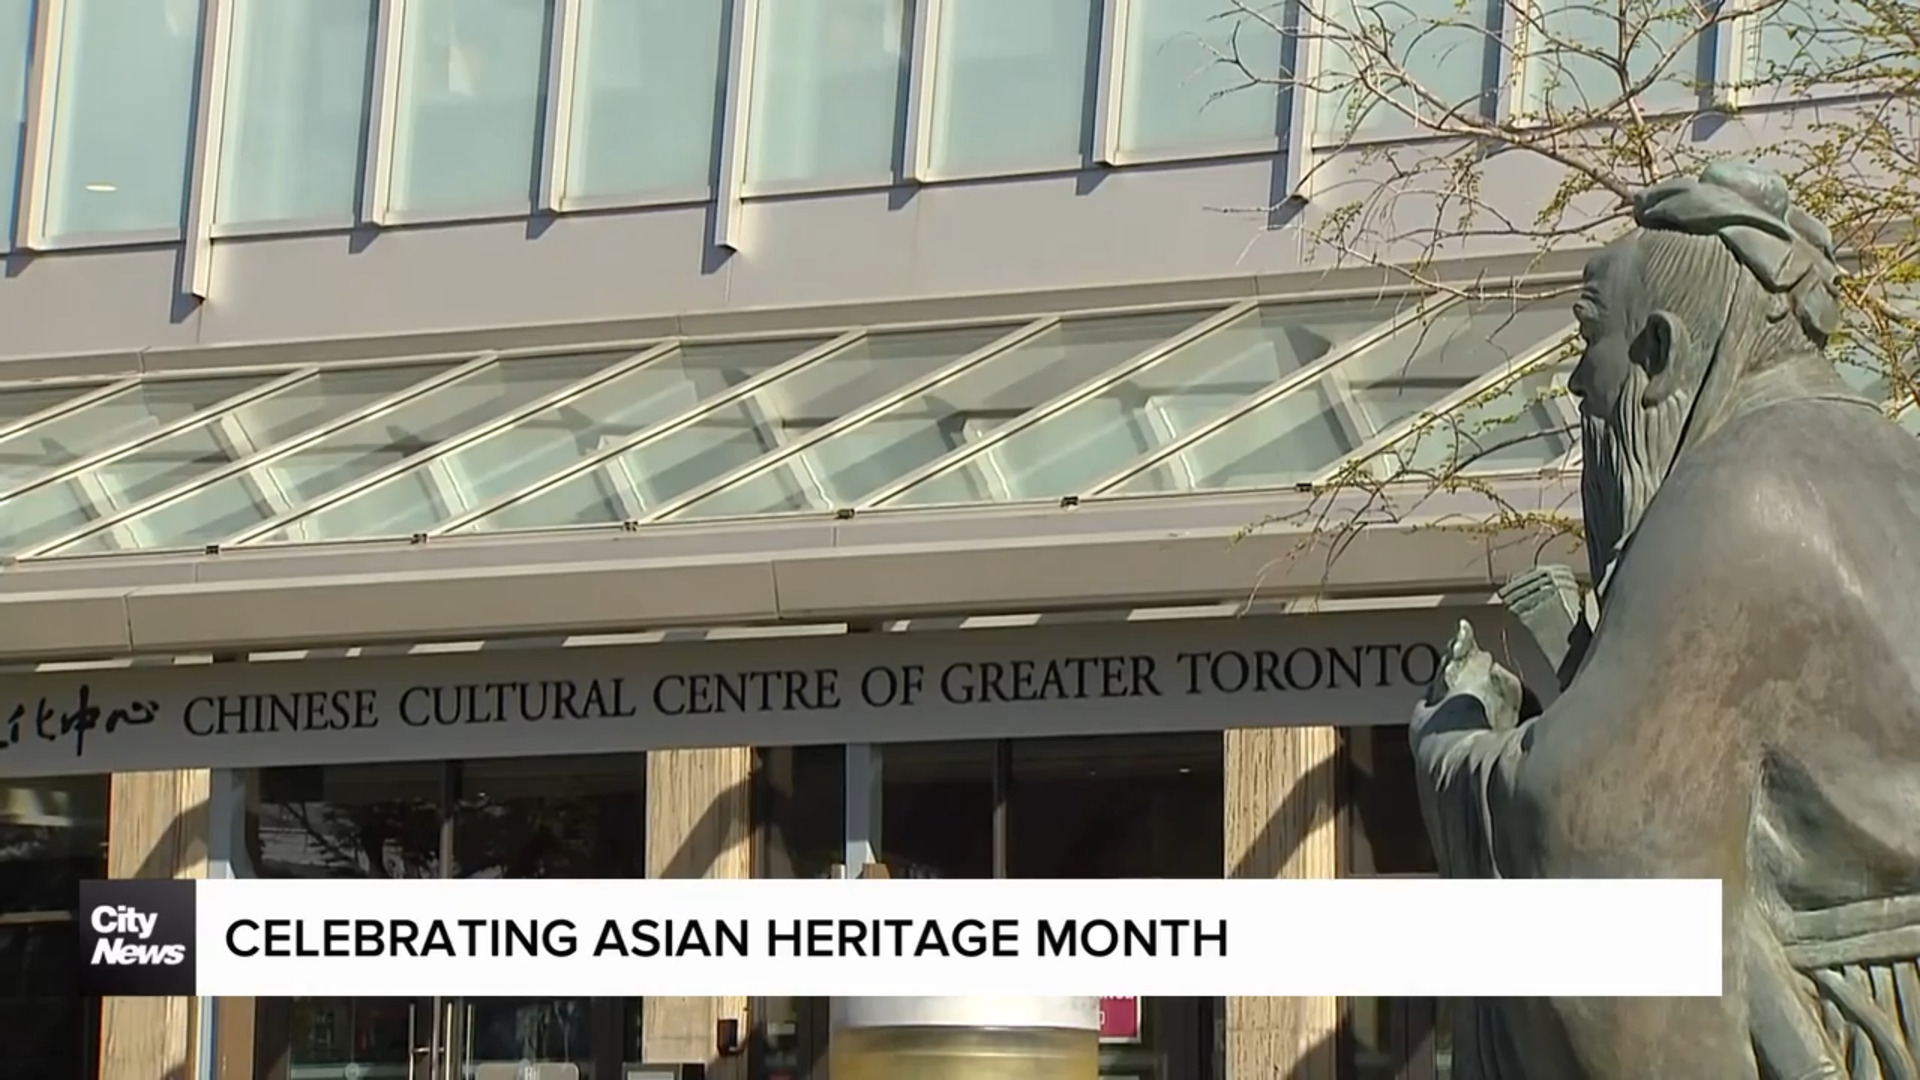 Celebrating Asian heritage month